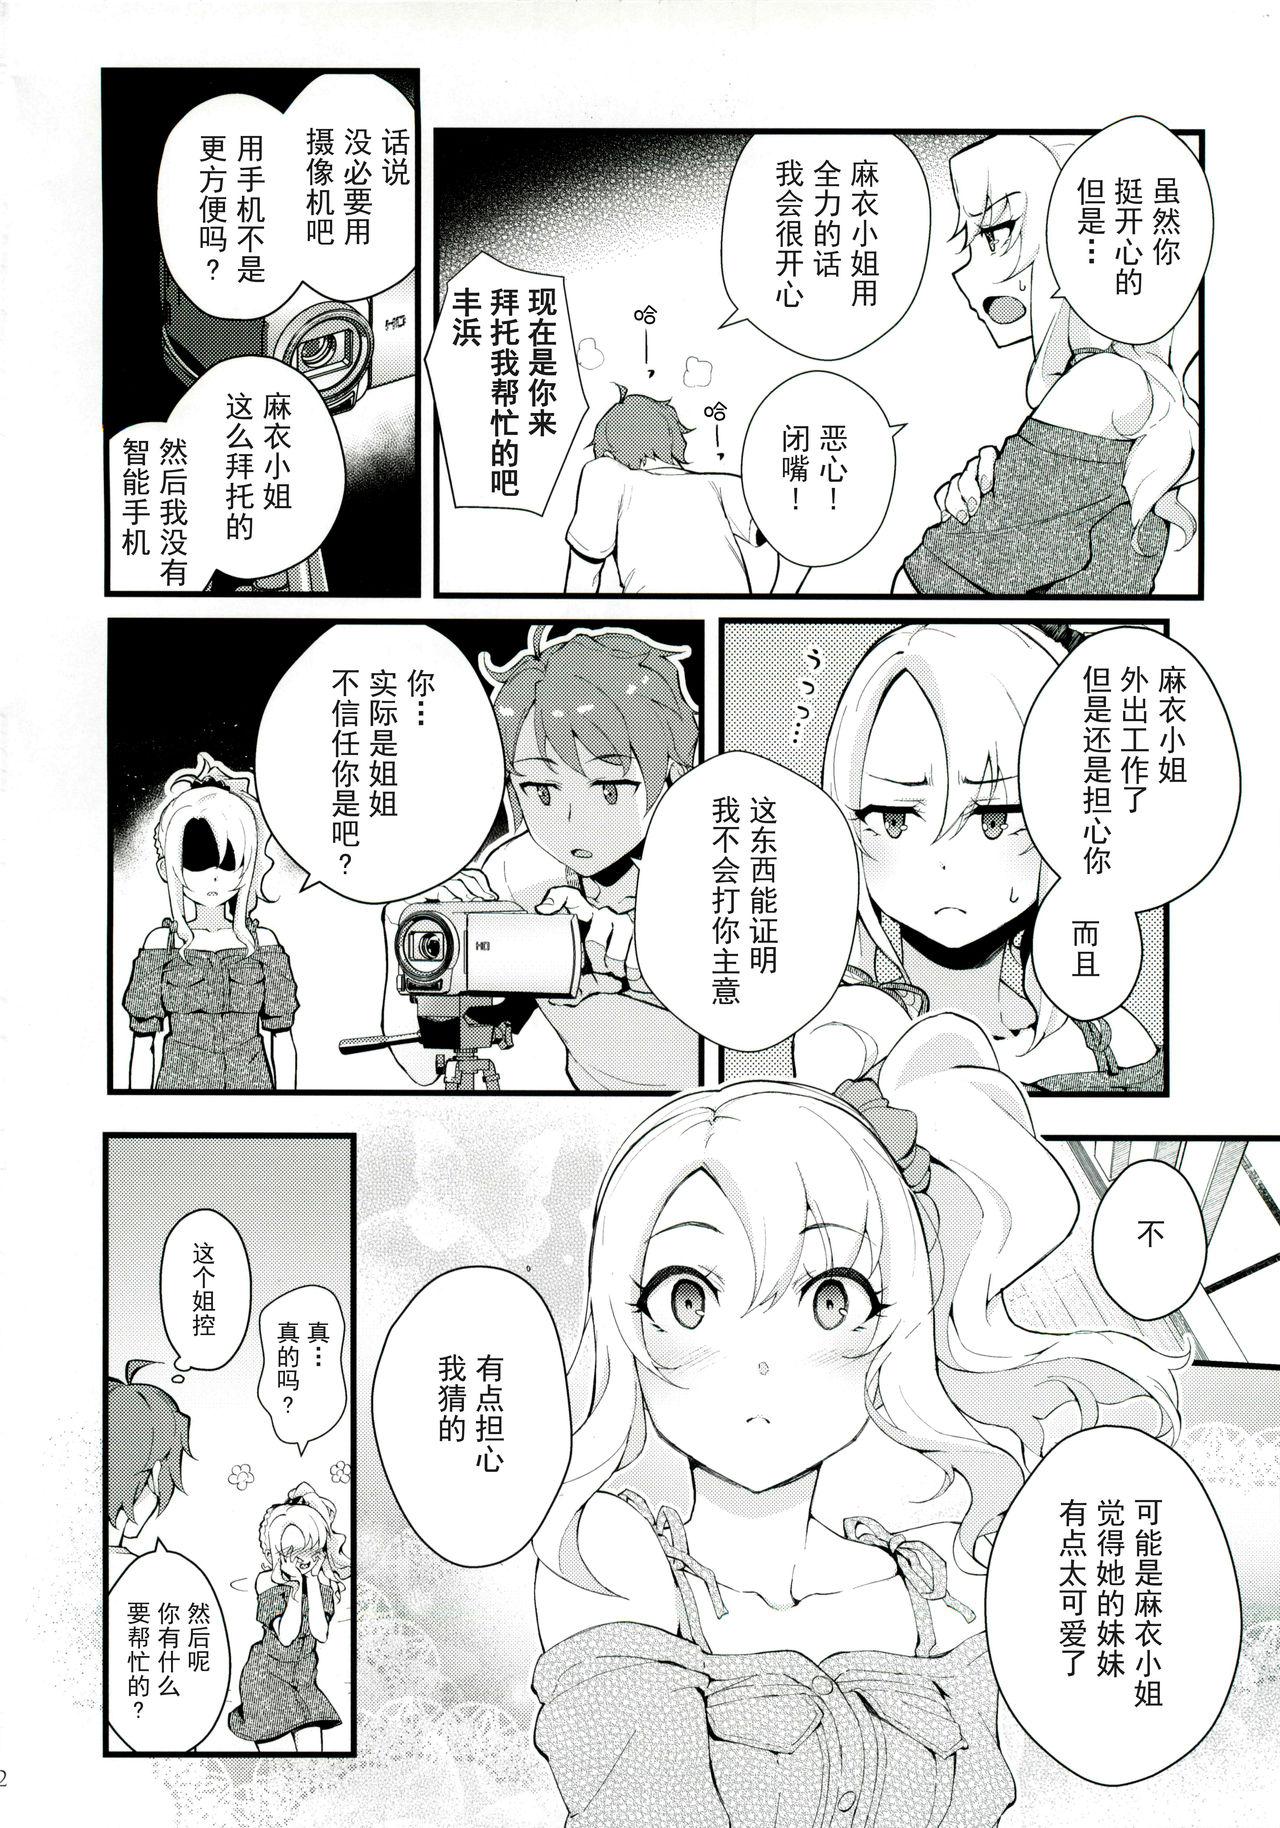 Sissy Sisters Panic - Seishun buta yarou wa bunny girl senpai no yume o minai Job - Page 3